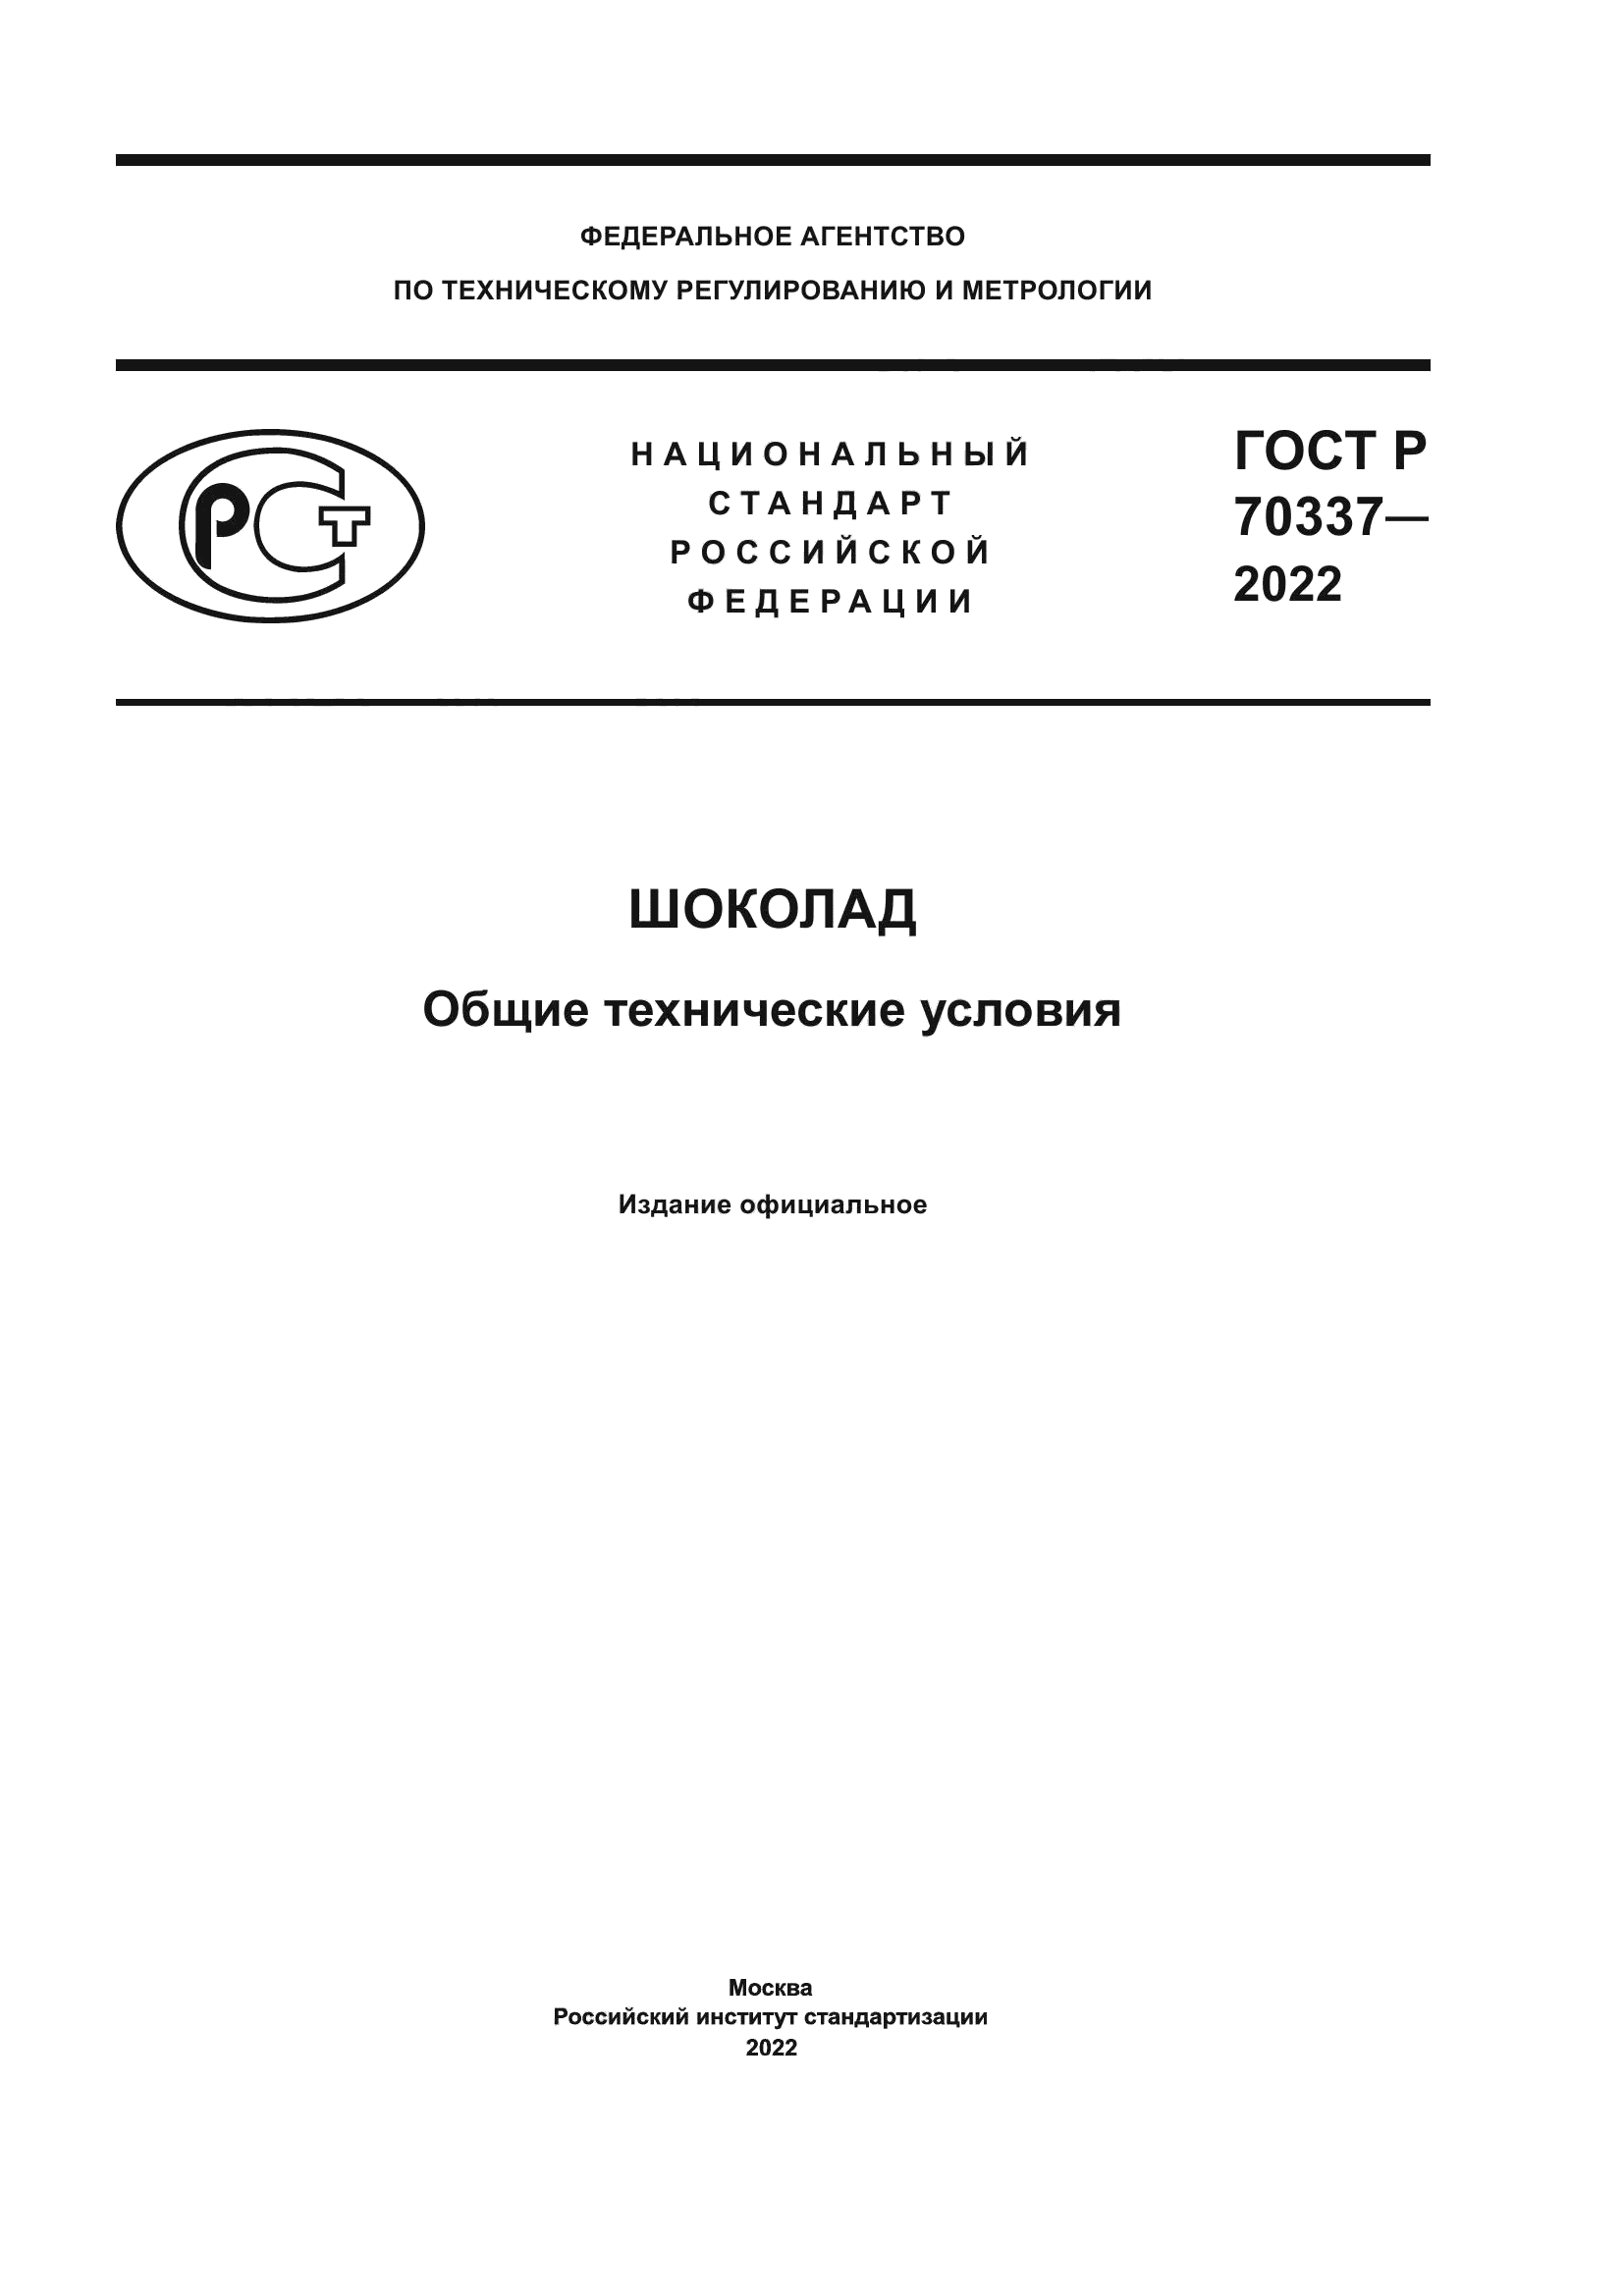 ГОСТ Р 70337-2022